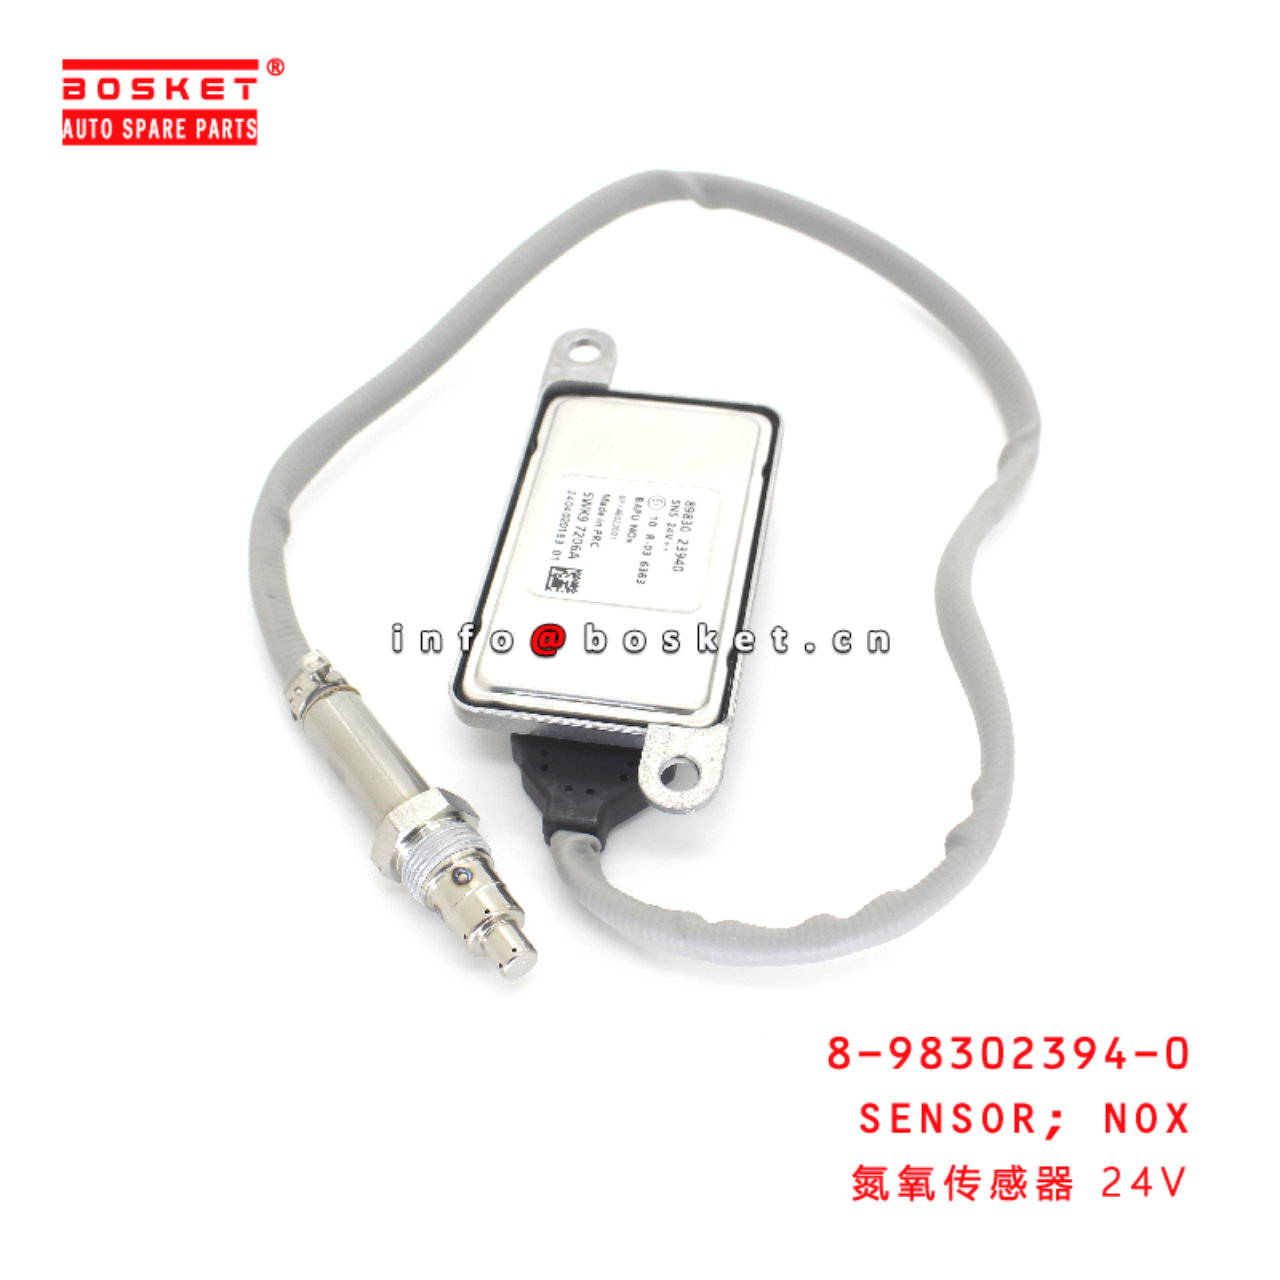 8-98302394-0 Nox Sensor suitable for ISUZU 8983023940 - For Other 